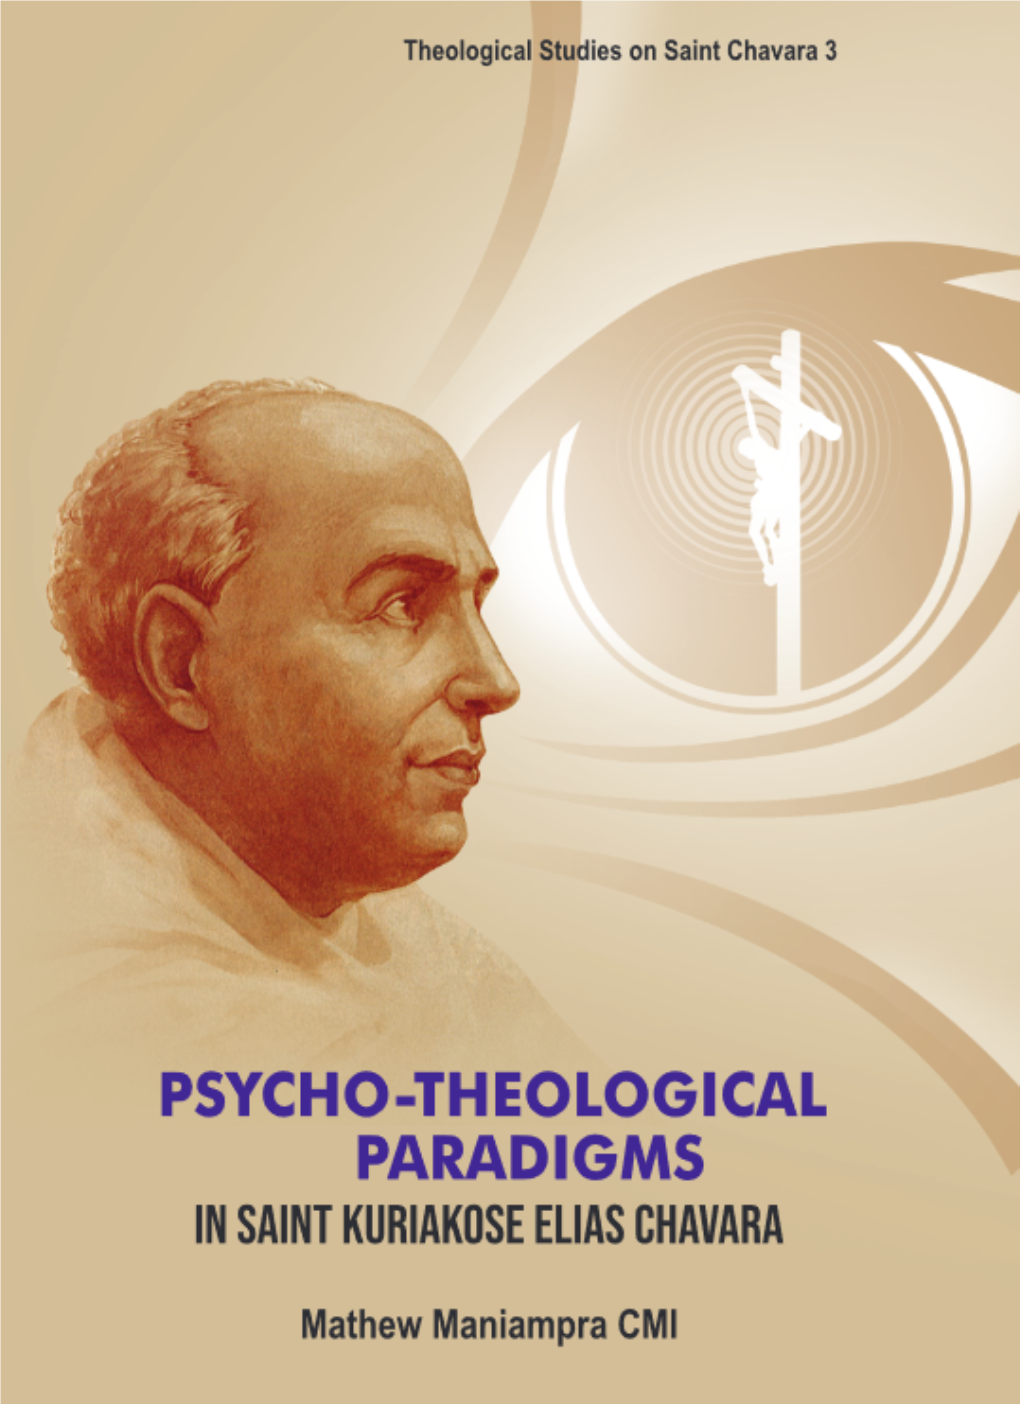 PSYCHO-THEOLOGICAL PARADIGMS in Saint Kuriakose Elias Chavara